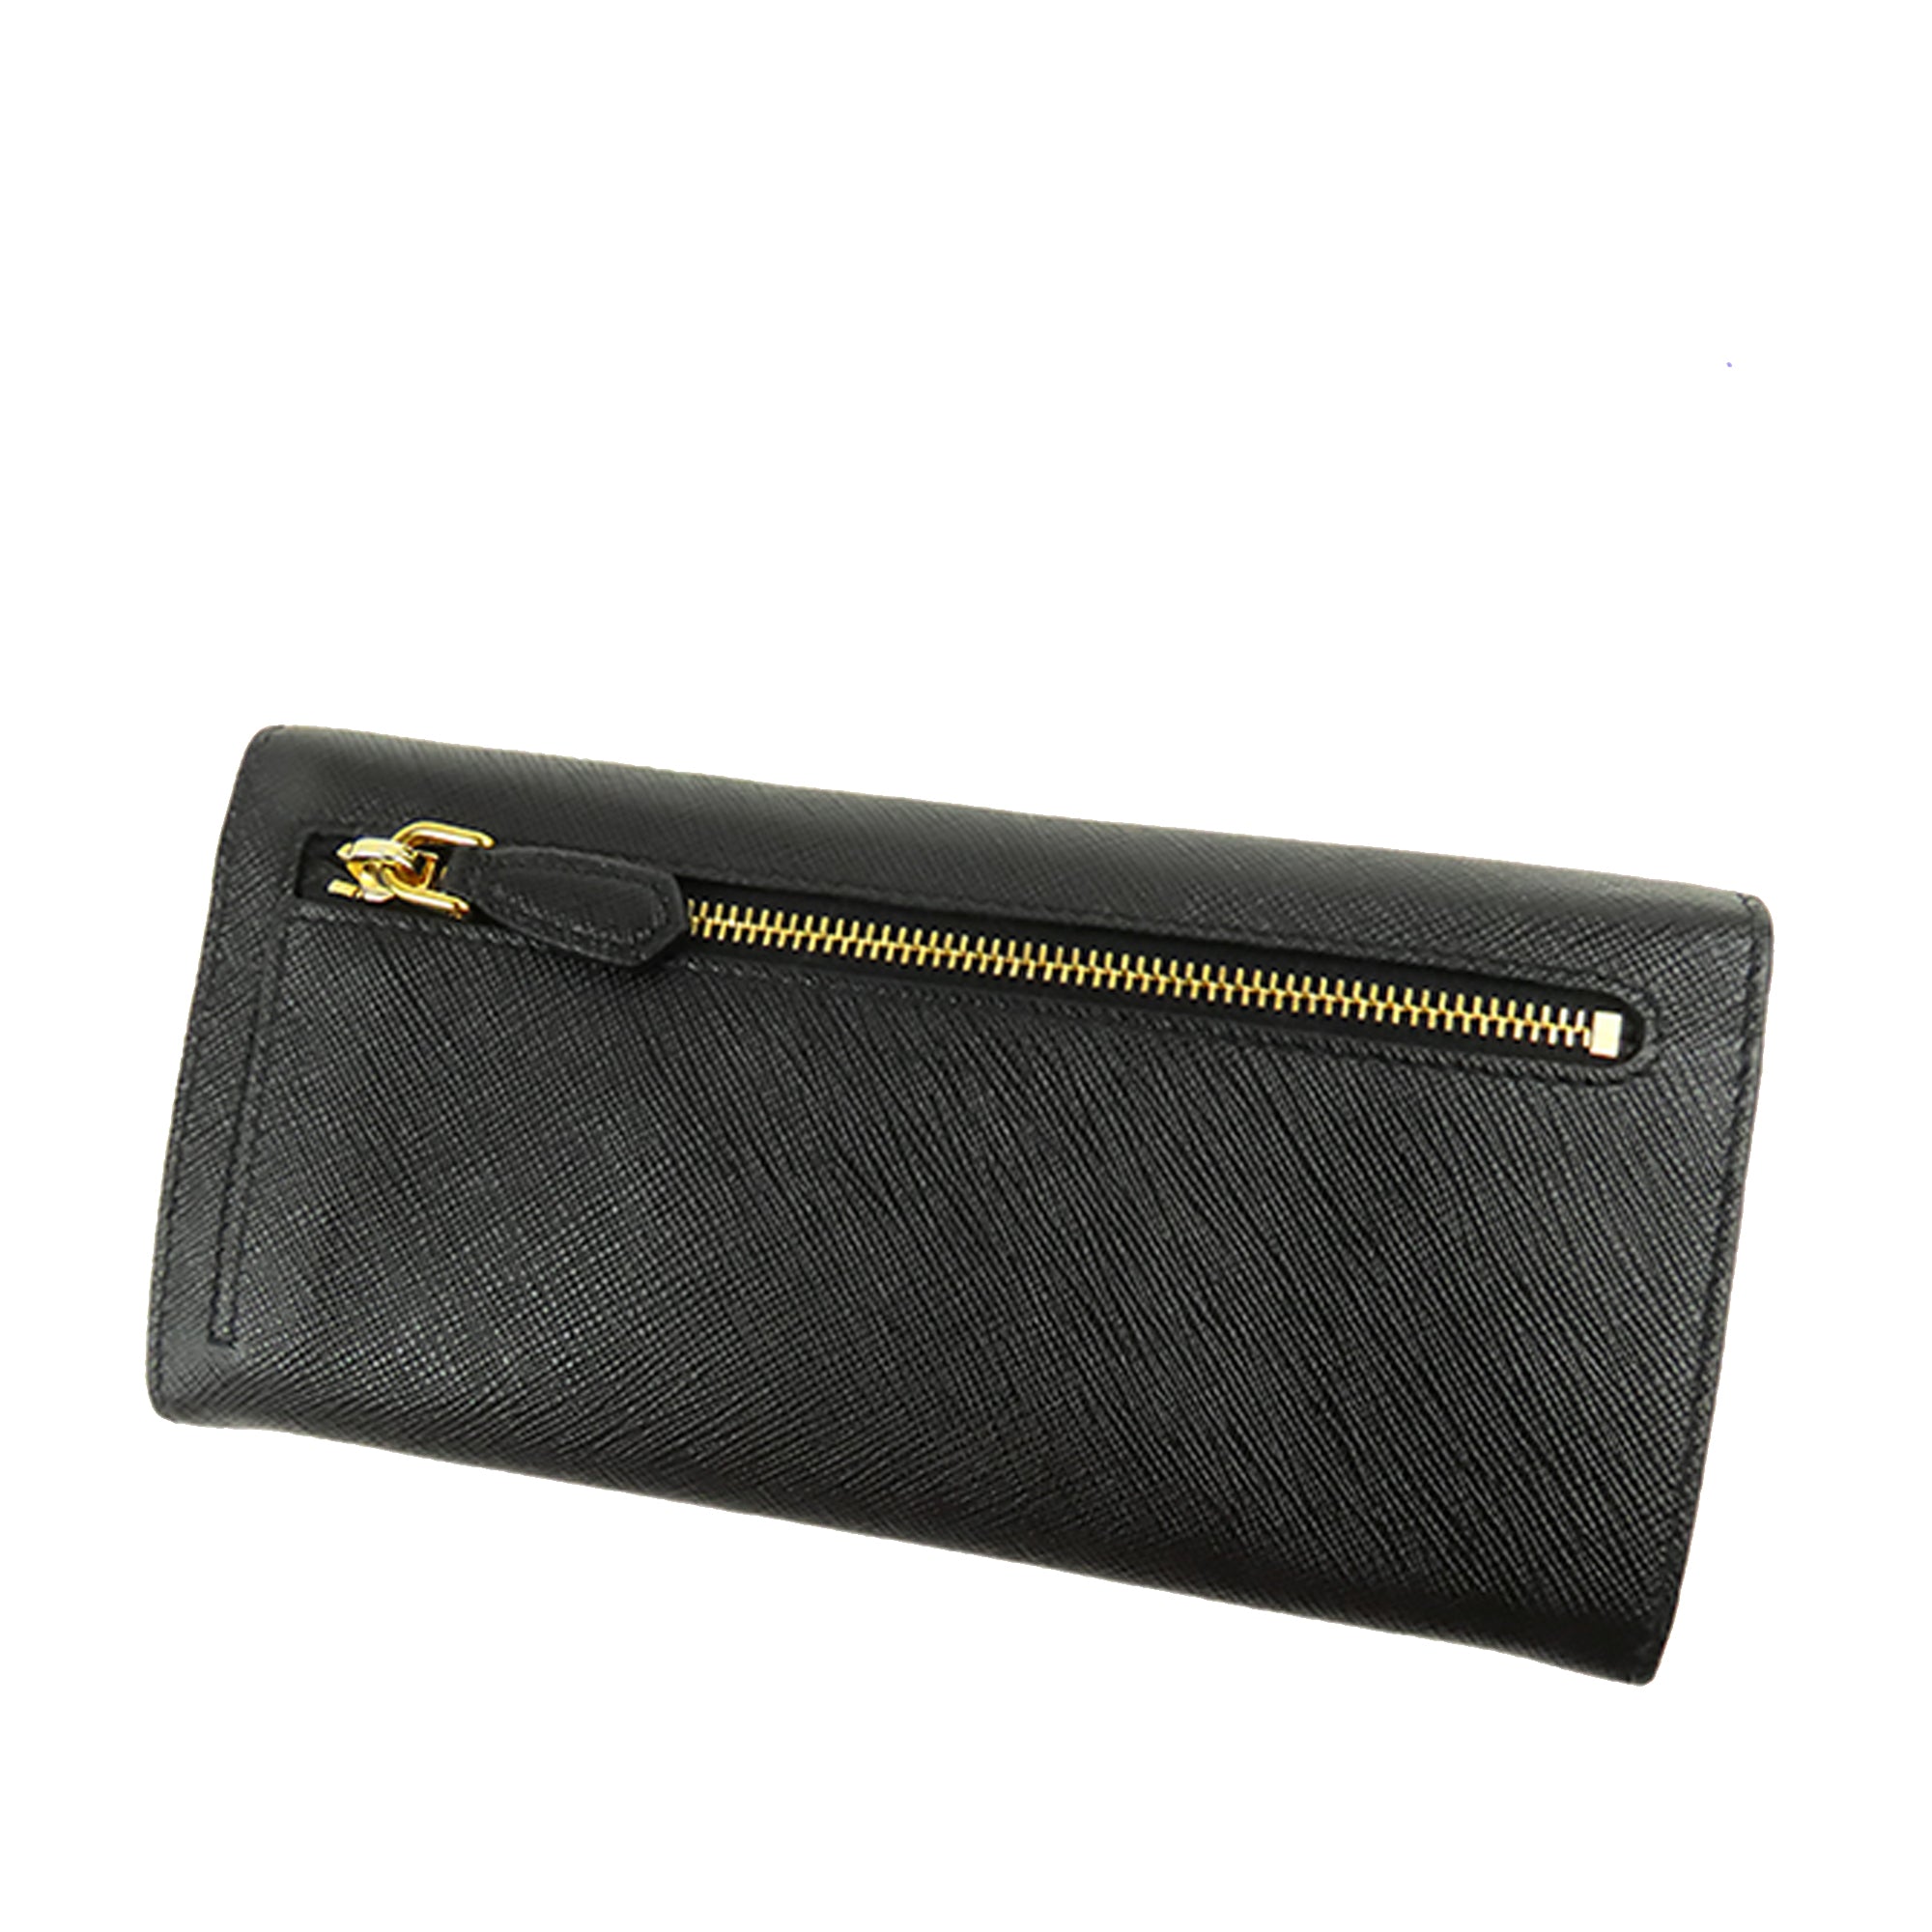 PRADA Prada Nero Saffiano Leather Long Wallet Wristlet with Card Holder - Vault 55